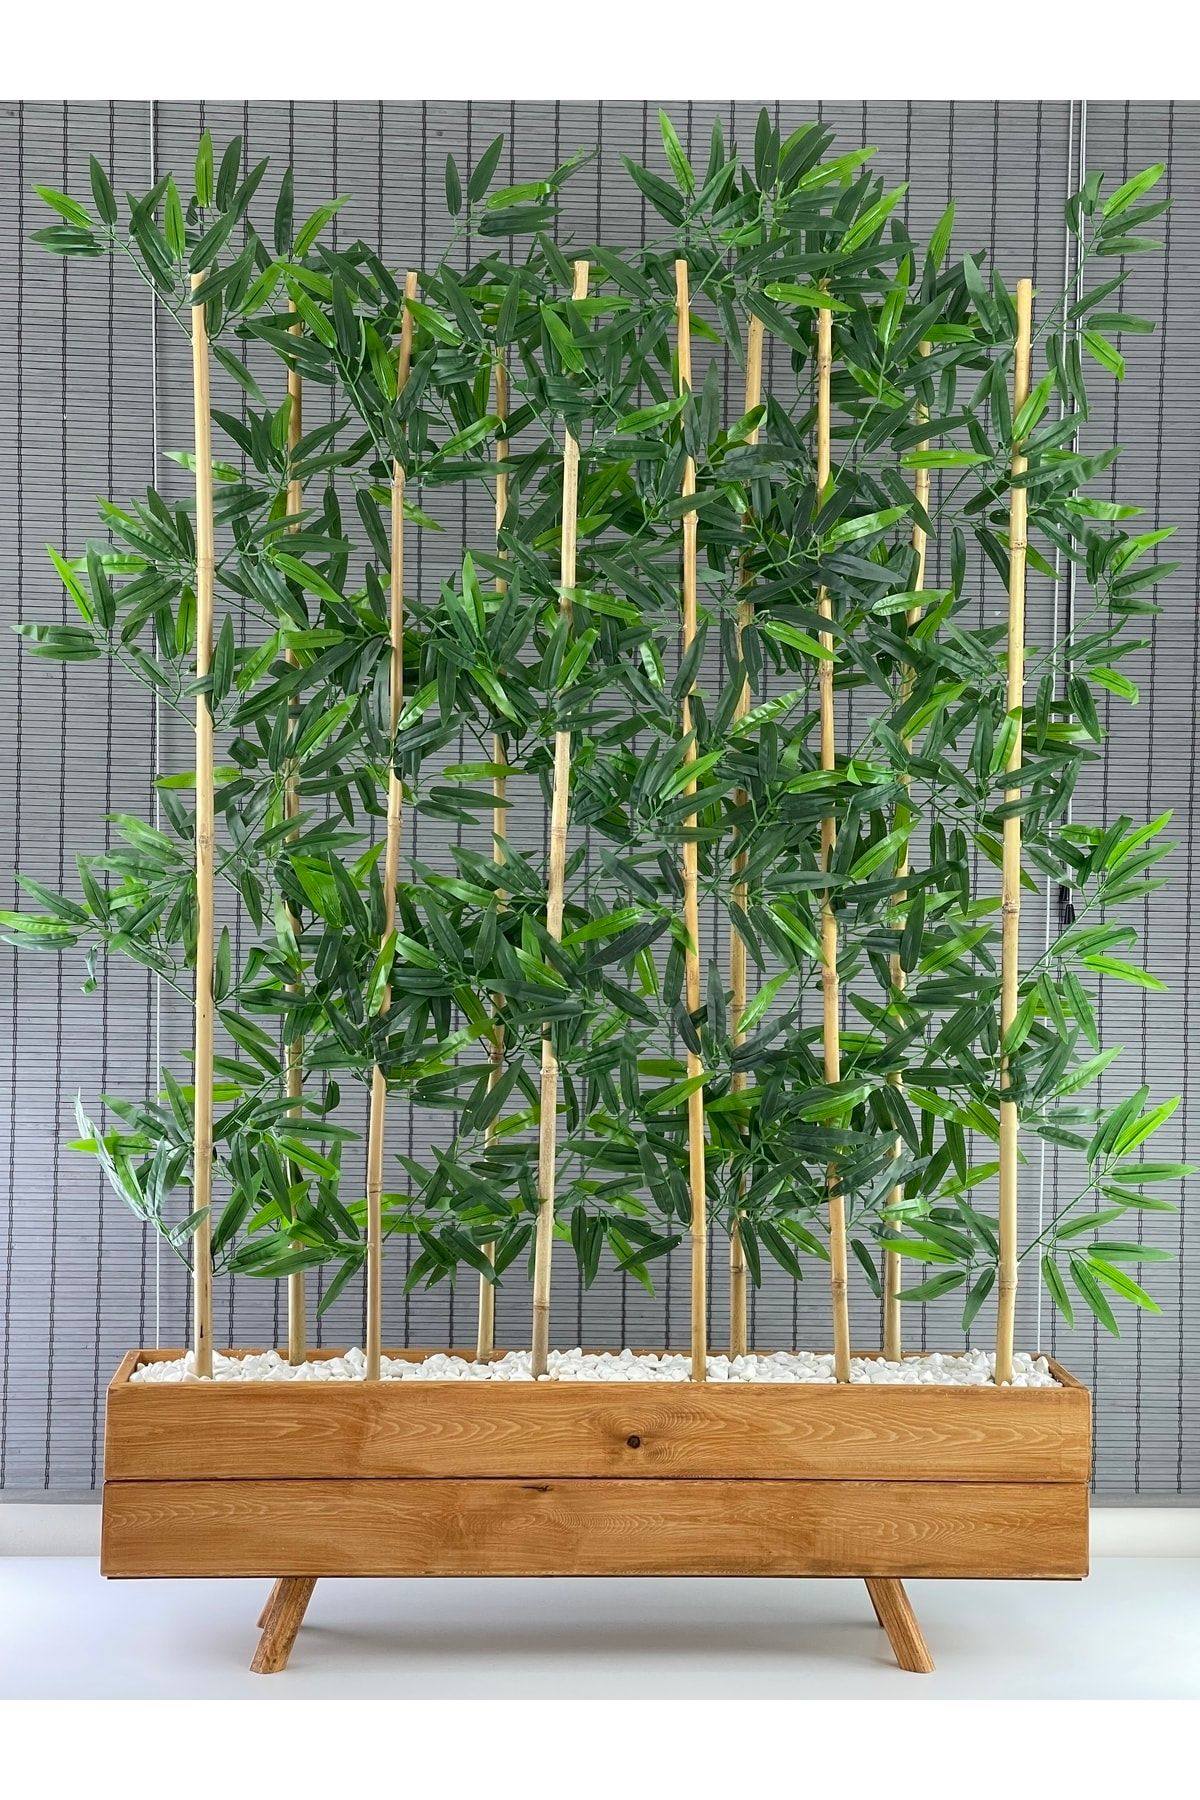 Bahçem Ahşap Çam 1mt Saksılı 10 Bambu Gövdeli 180cm Dikdörtgen Yapay Yapraklı Dekoratif Bambu Seperatör